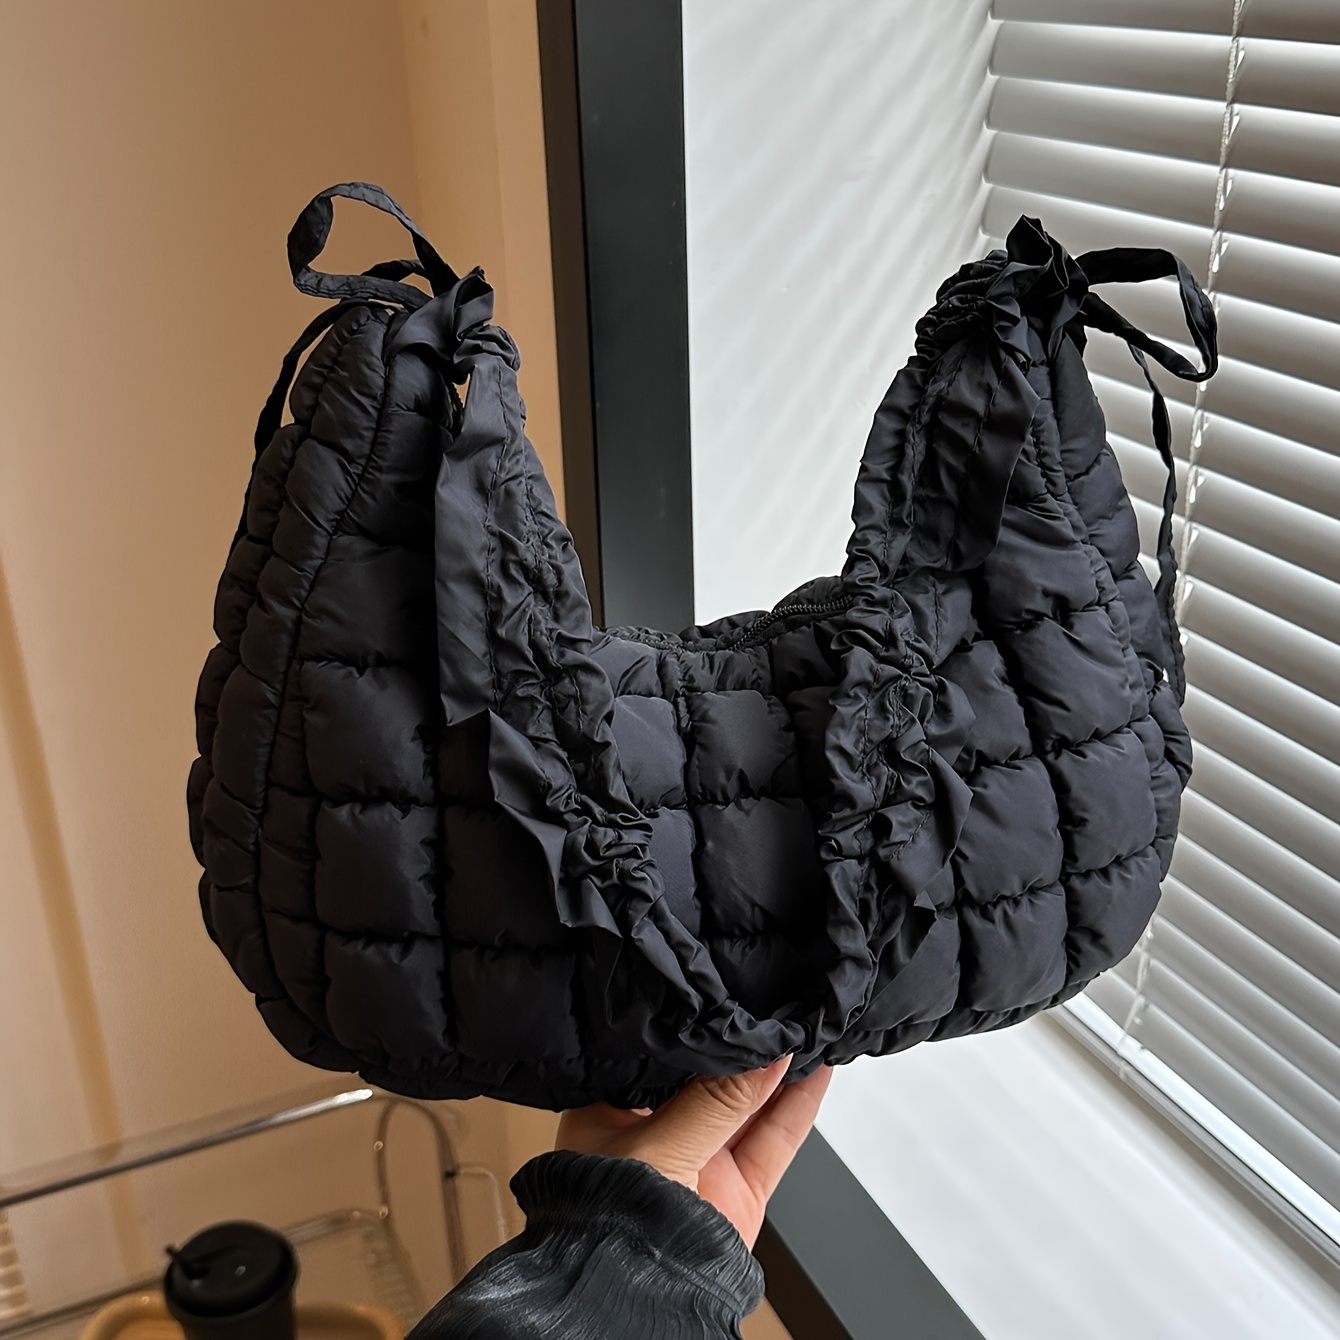 Zipper Quilted Handbags, Bags